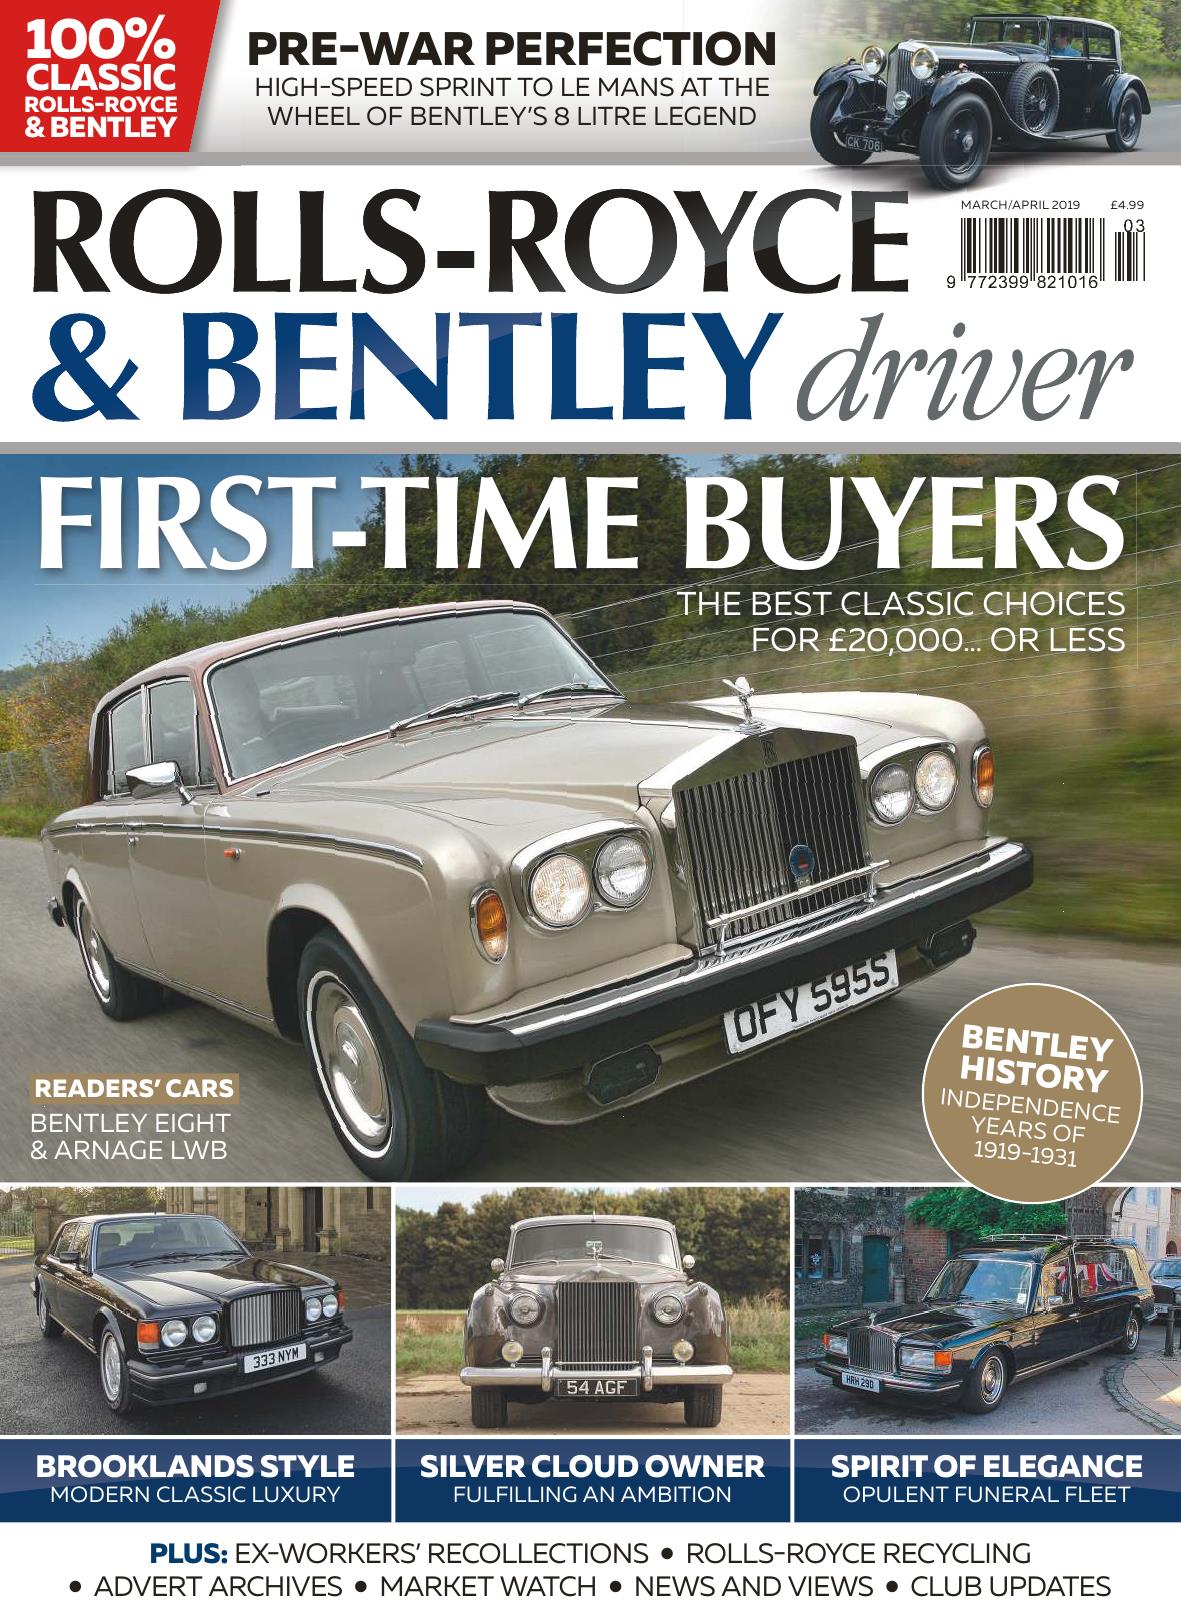 Журнал Rolls-Royce & Bentley Driver — Issue 10 2019